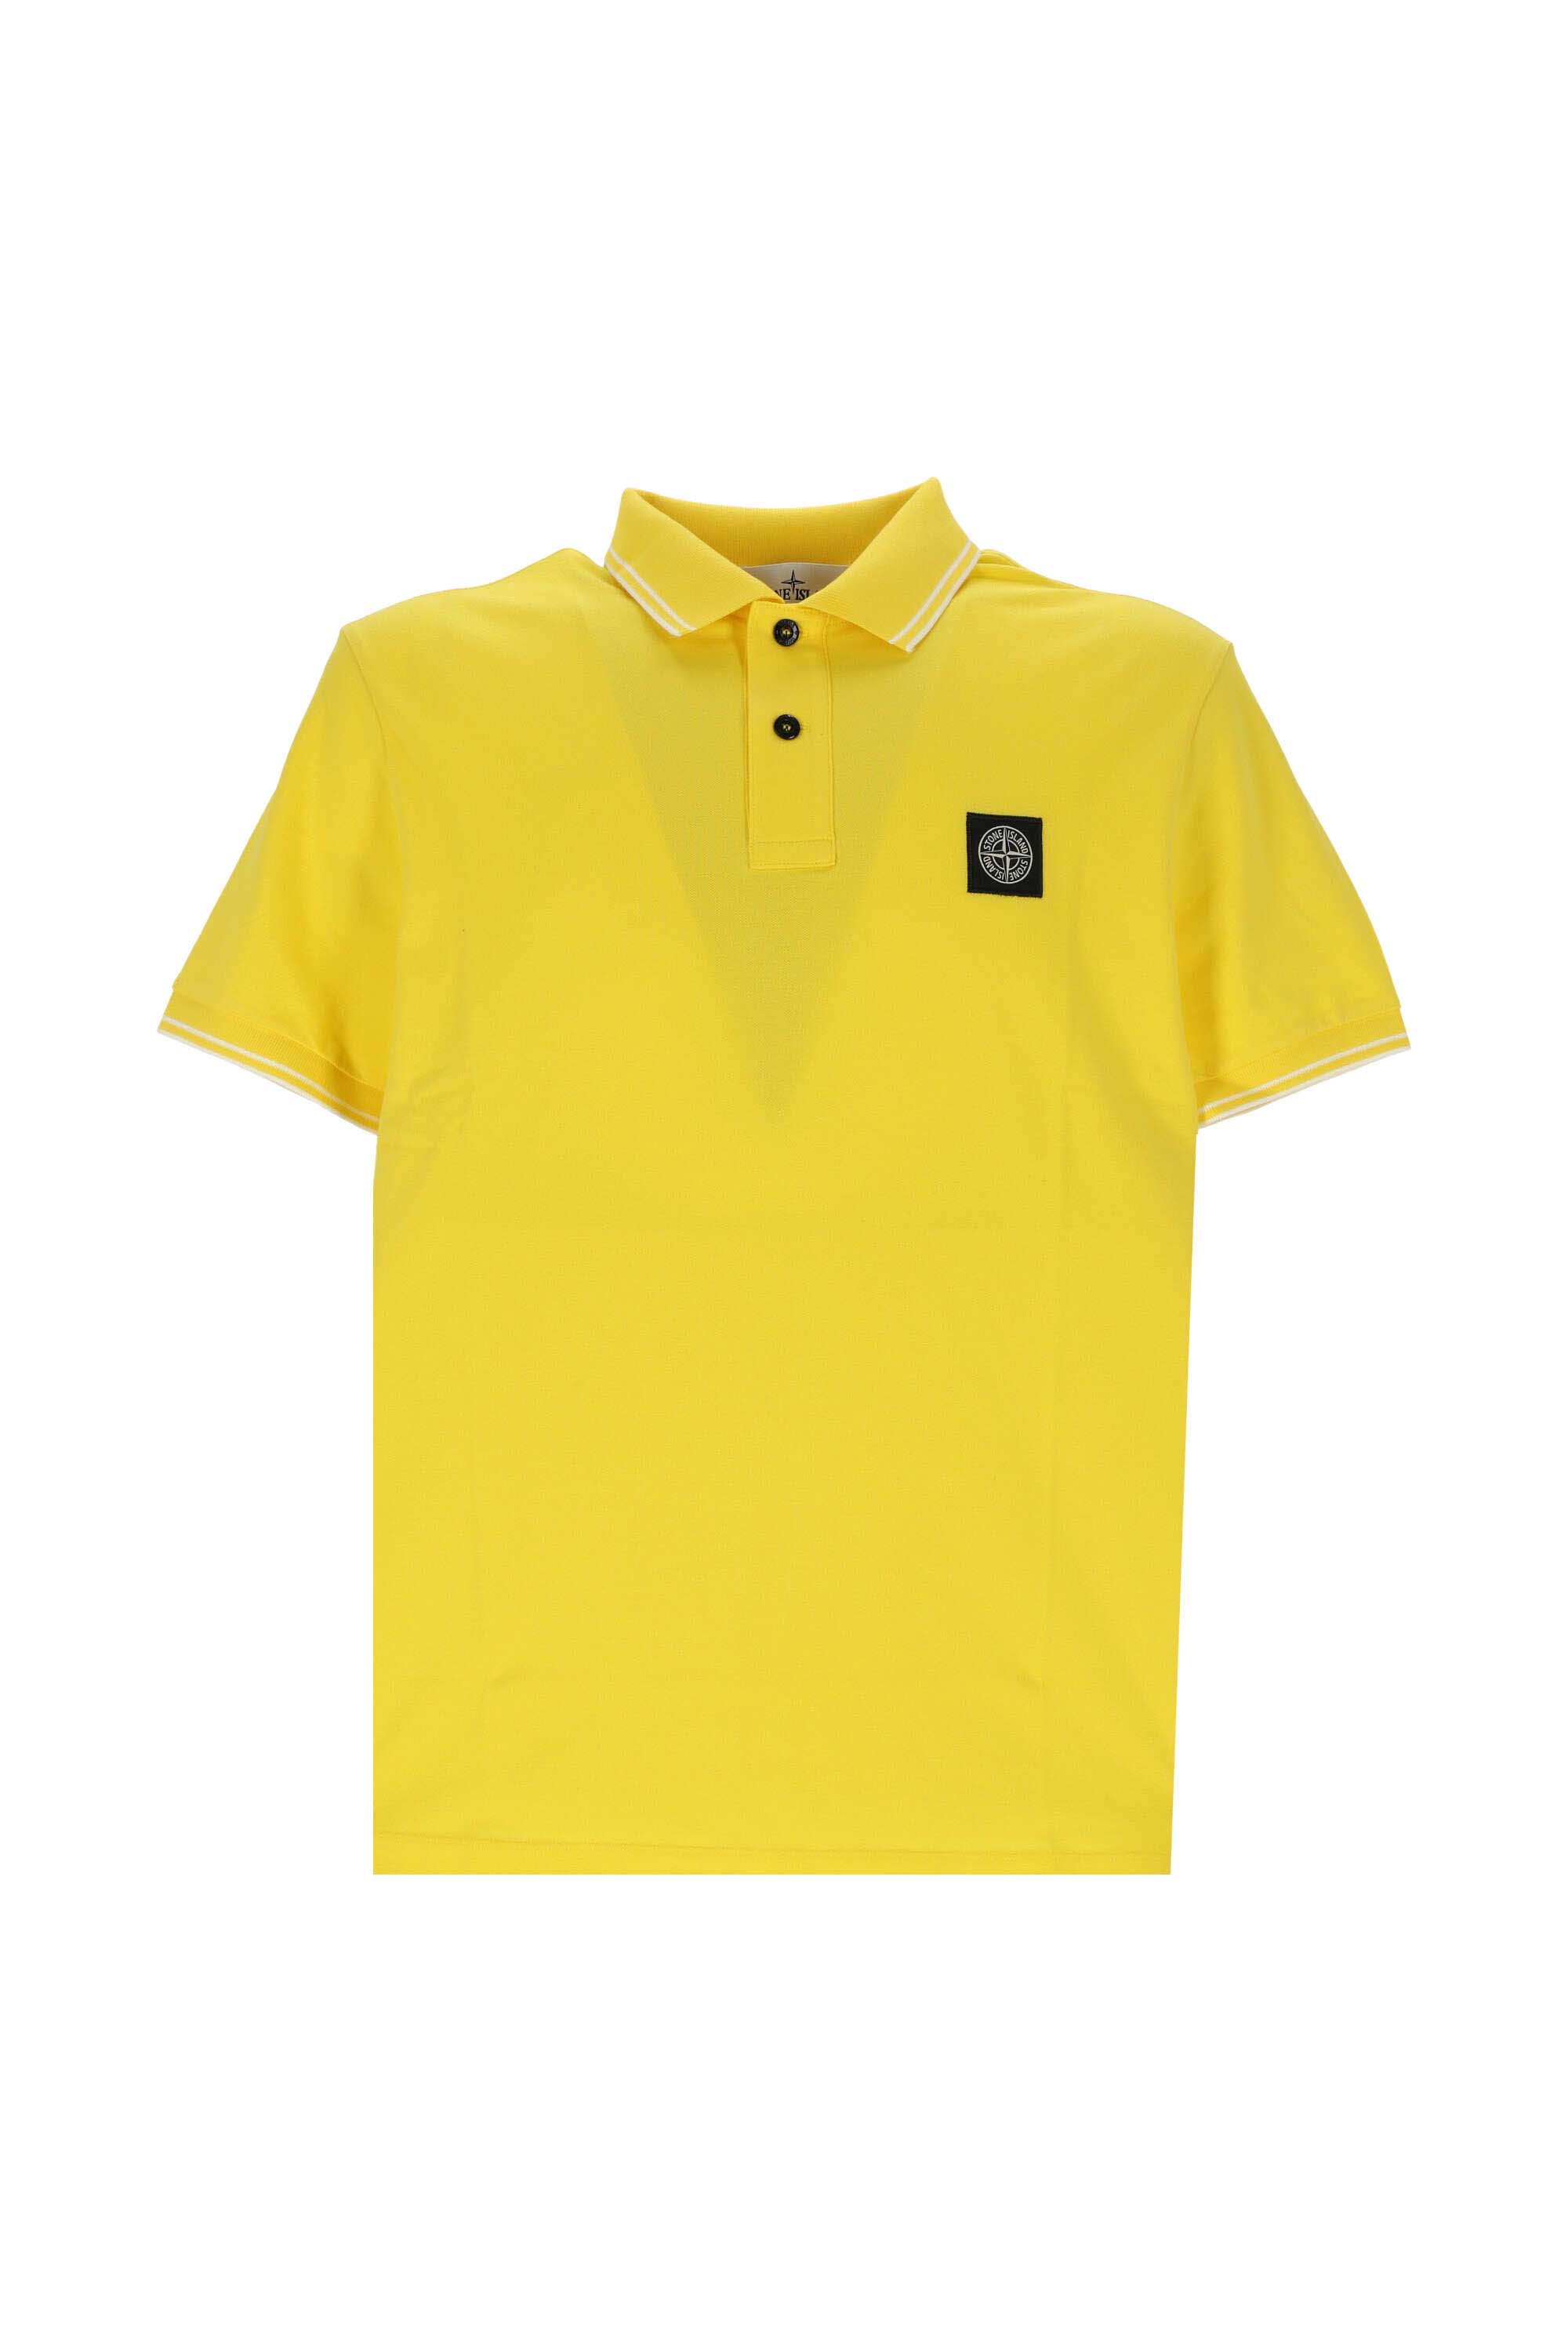 Stone Island Logo Poloshirt Yellow メンズ - JP